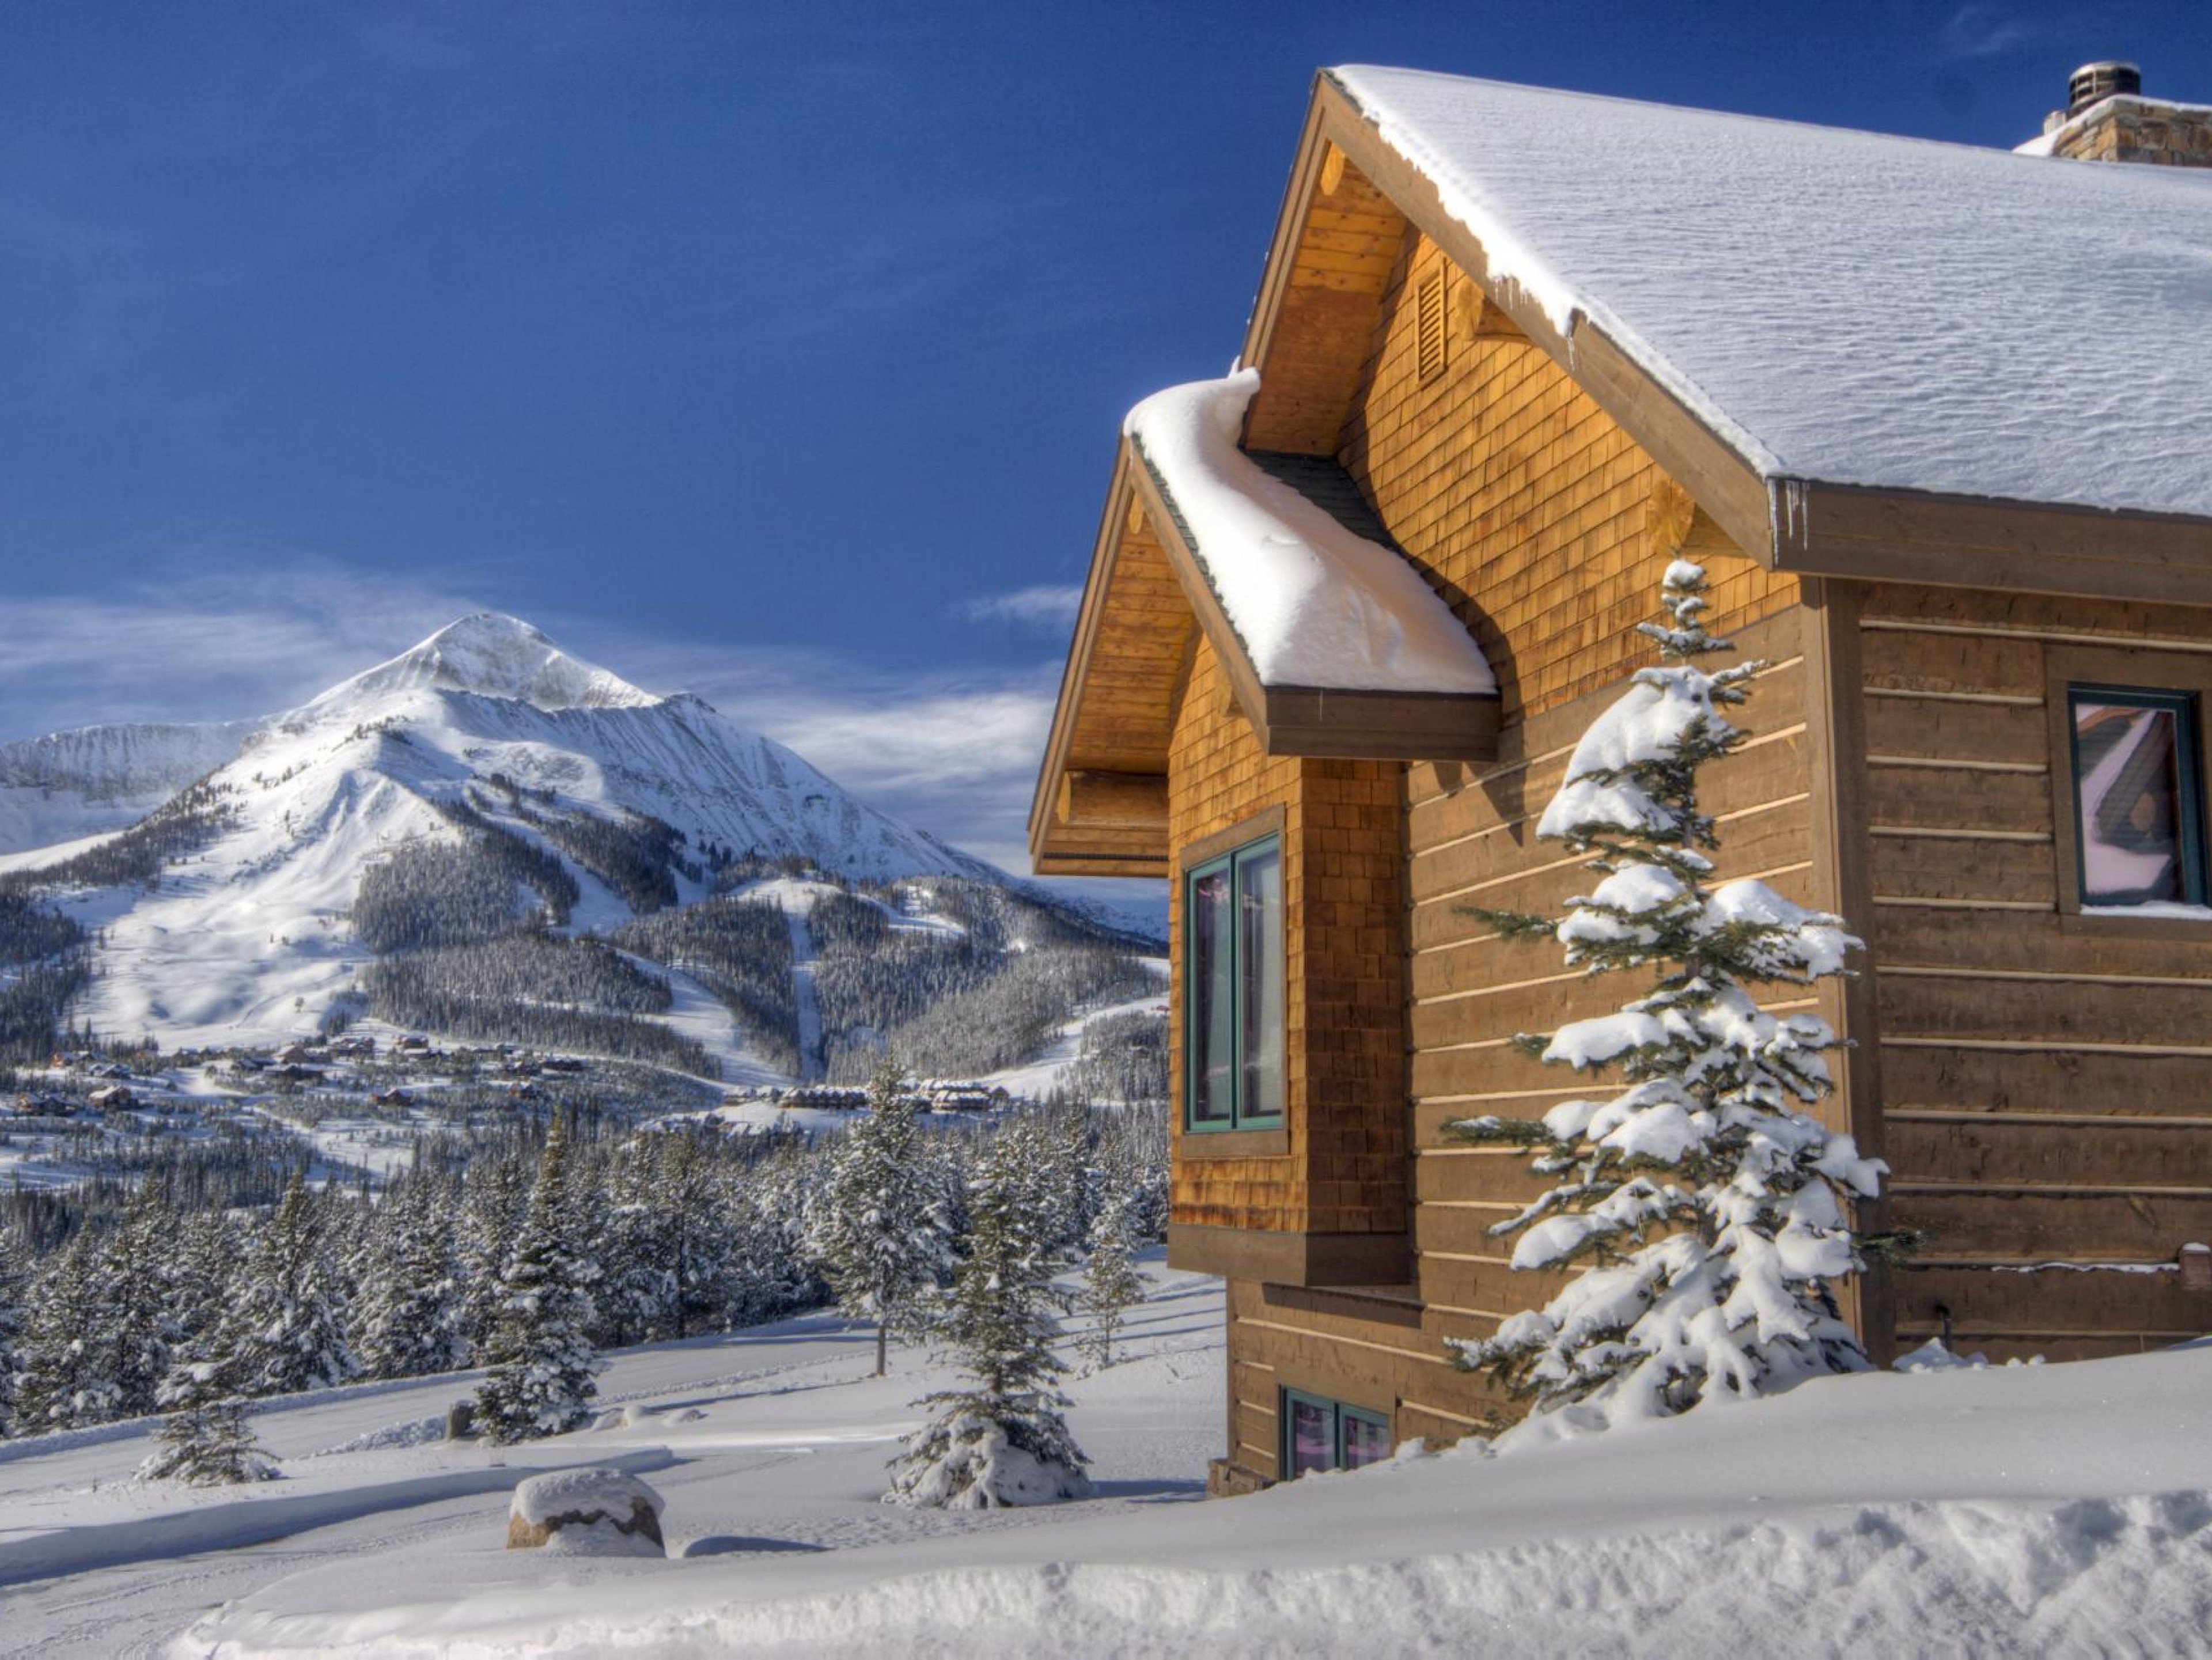 Big Sky 25 cabin rentals near Yellowstone